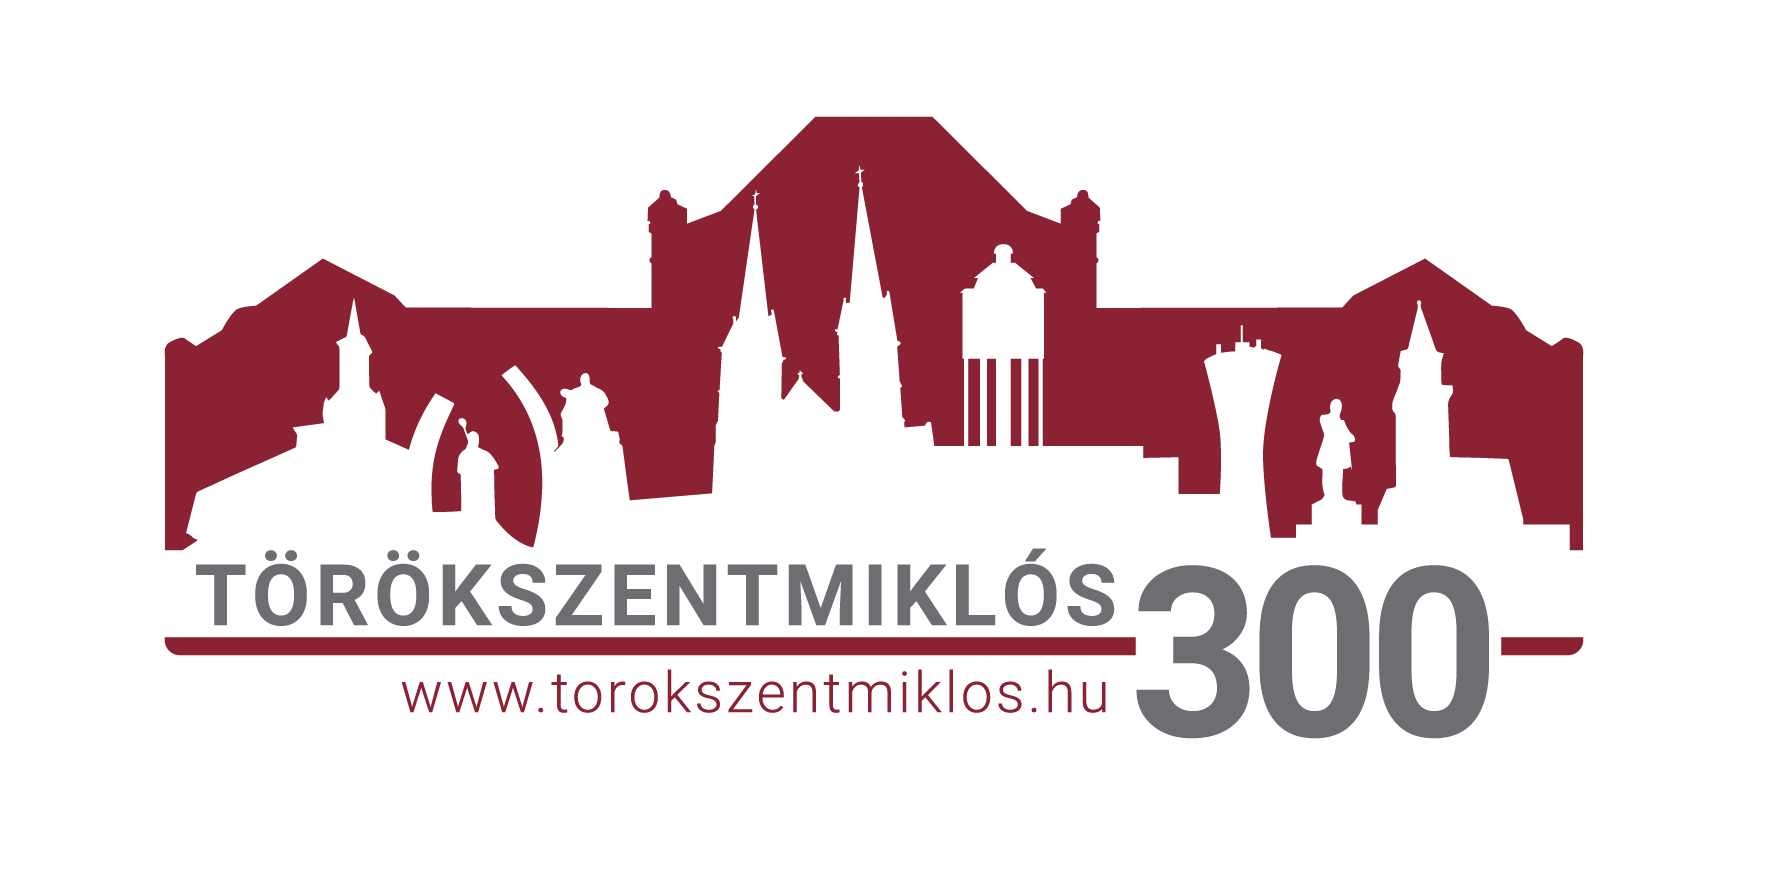 TMIKLOS300_LOGO-01